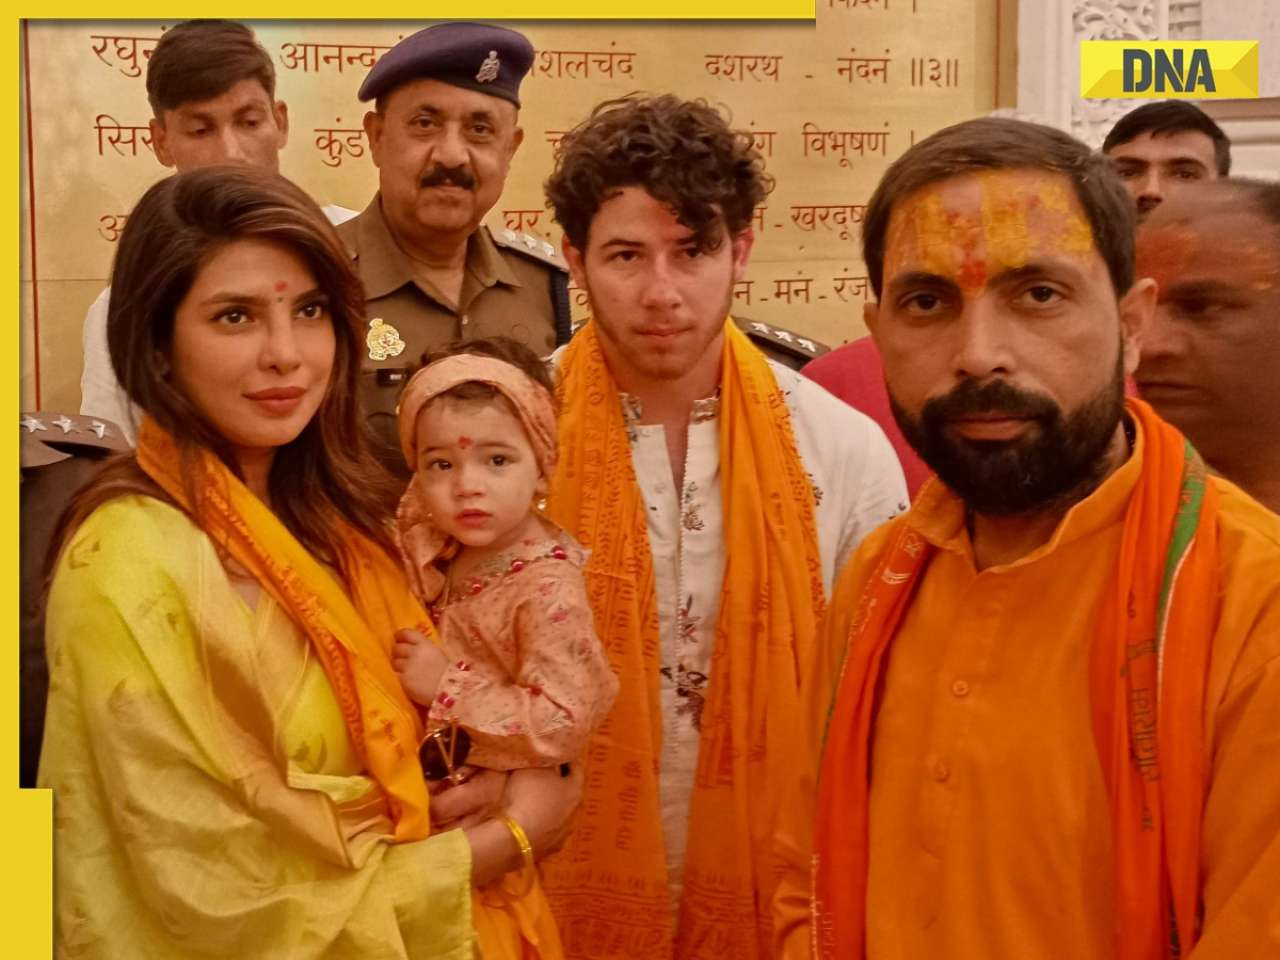 Priyanka Chopra offers prayers at Ram Mandir in Ayodhya with husband Nick Jonas, daughter Malti Marie; see inside pics